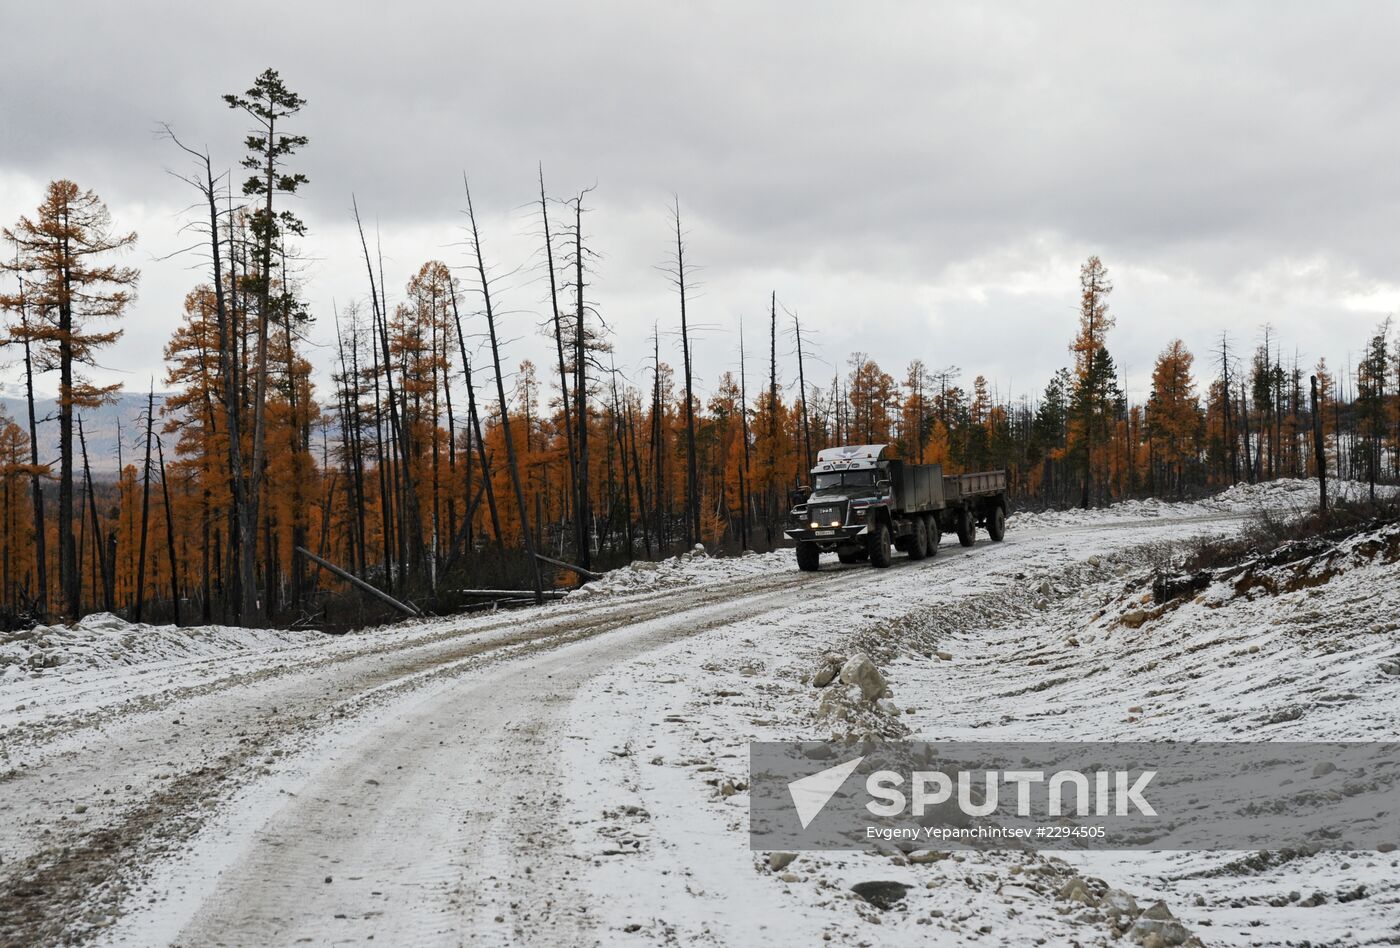 Construction of road in Olekminsky Region of the Republic of Sakha, Yakutia